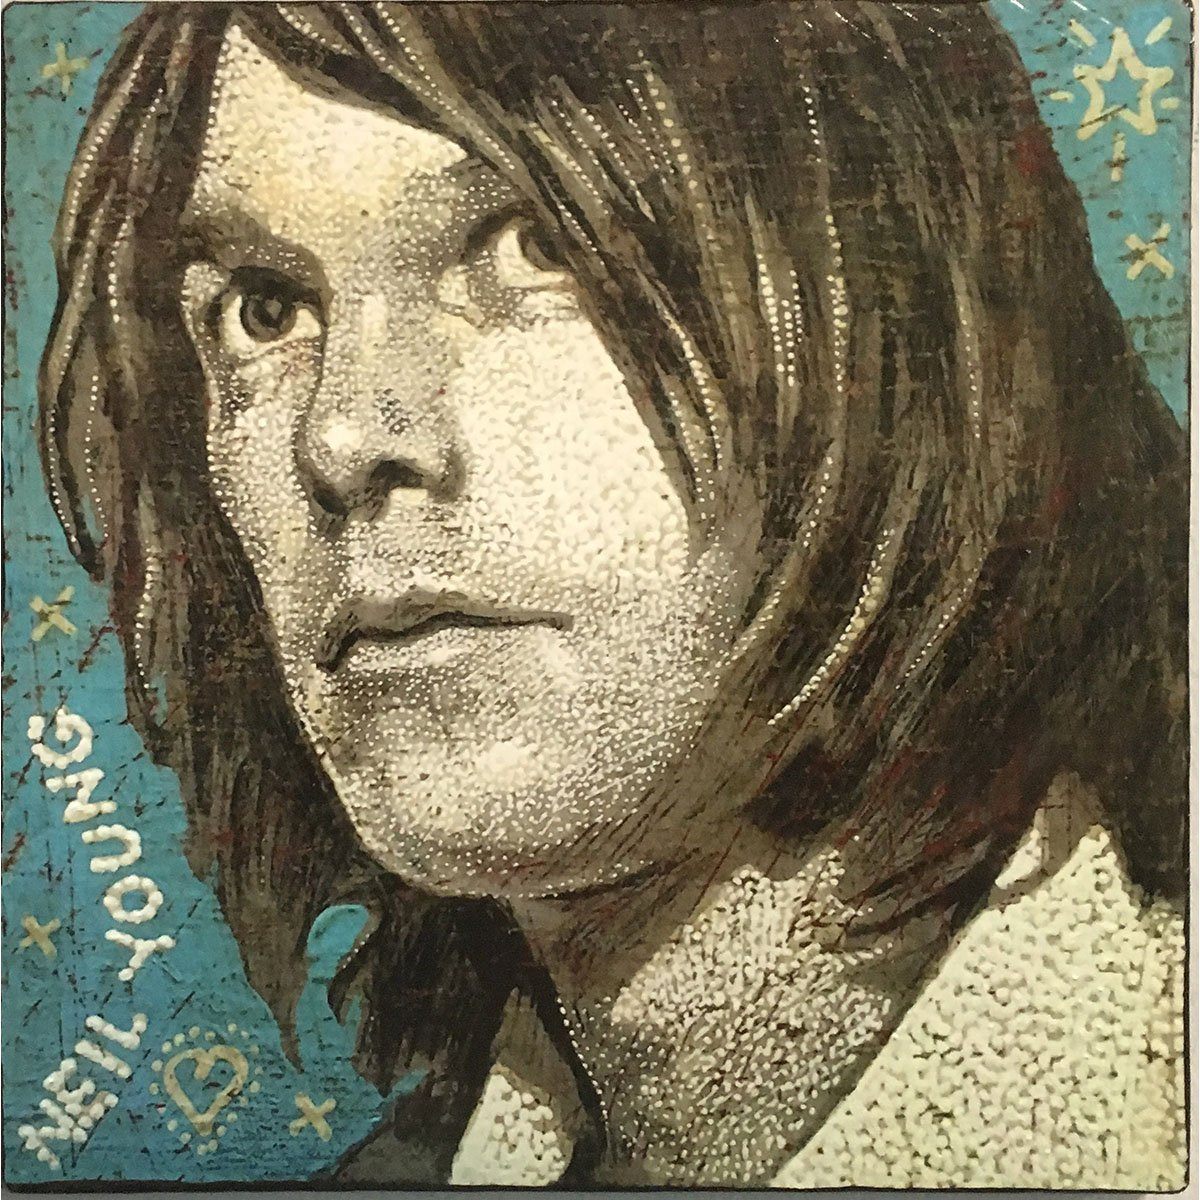 Neil Young - Large Print Jon Langford